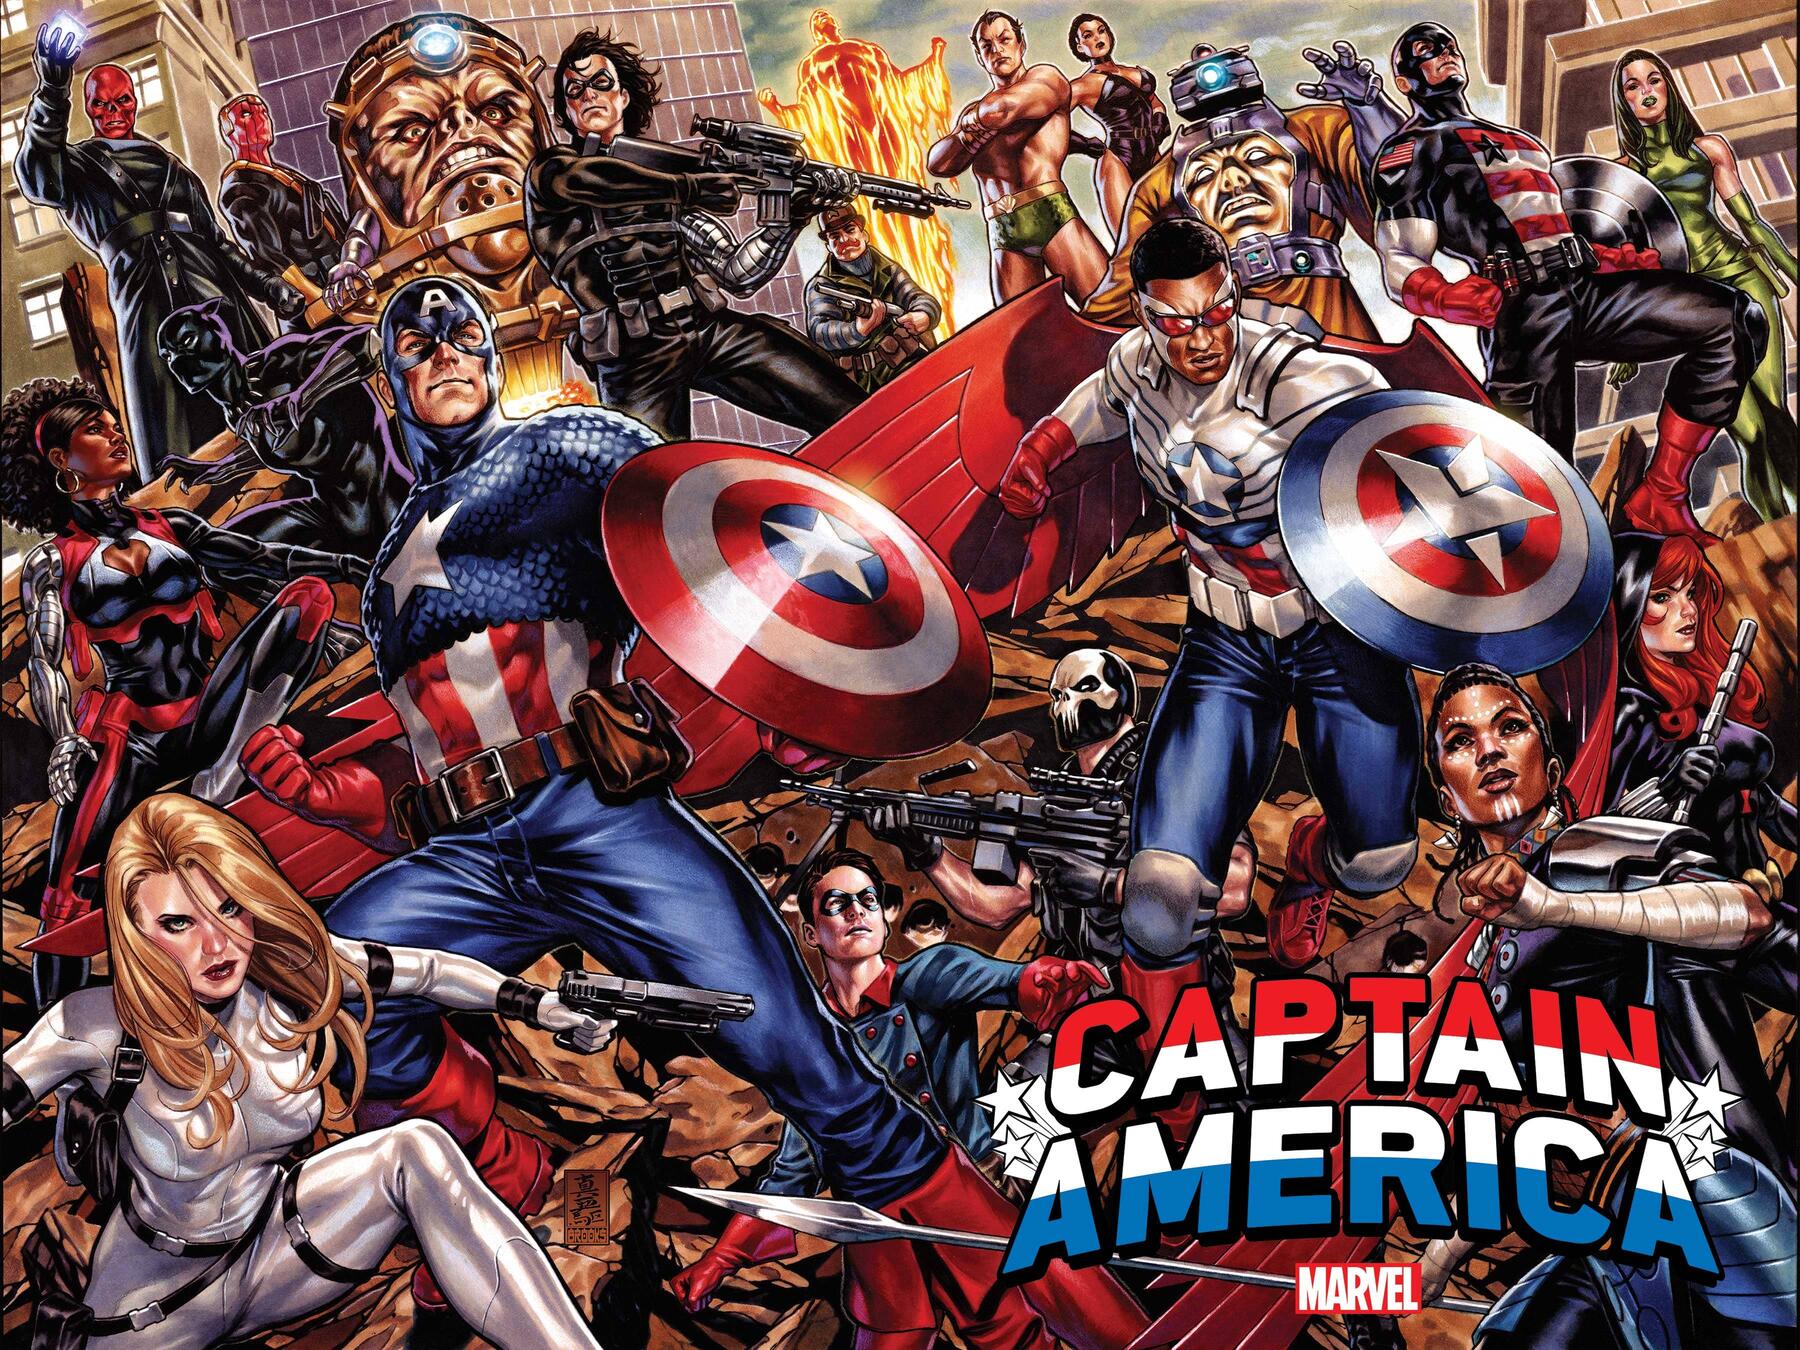 'Captain America' #0 is a gorgeous action-adventure